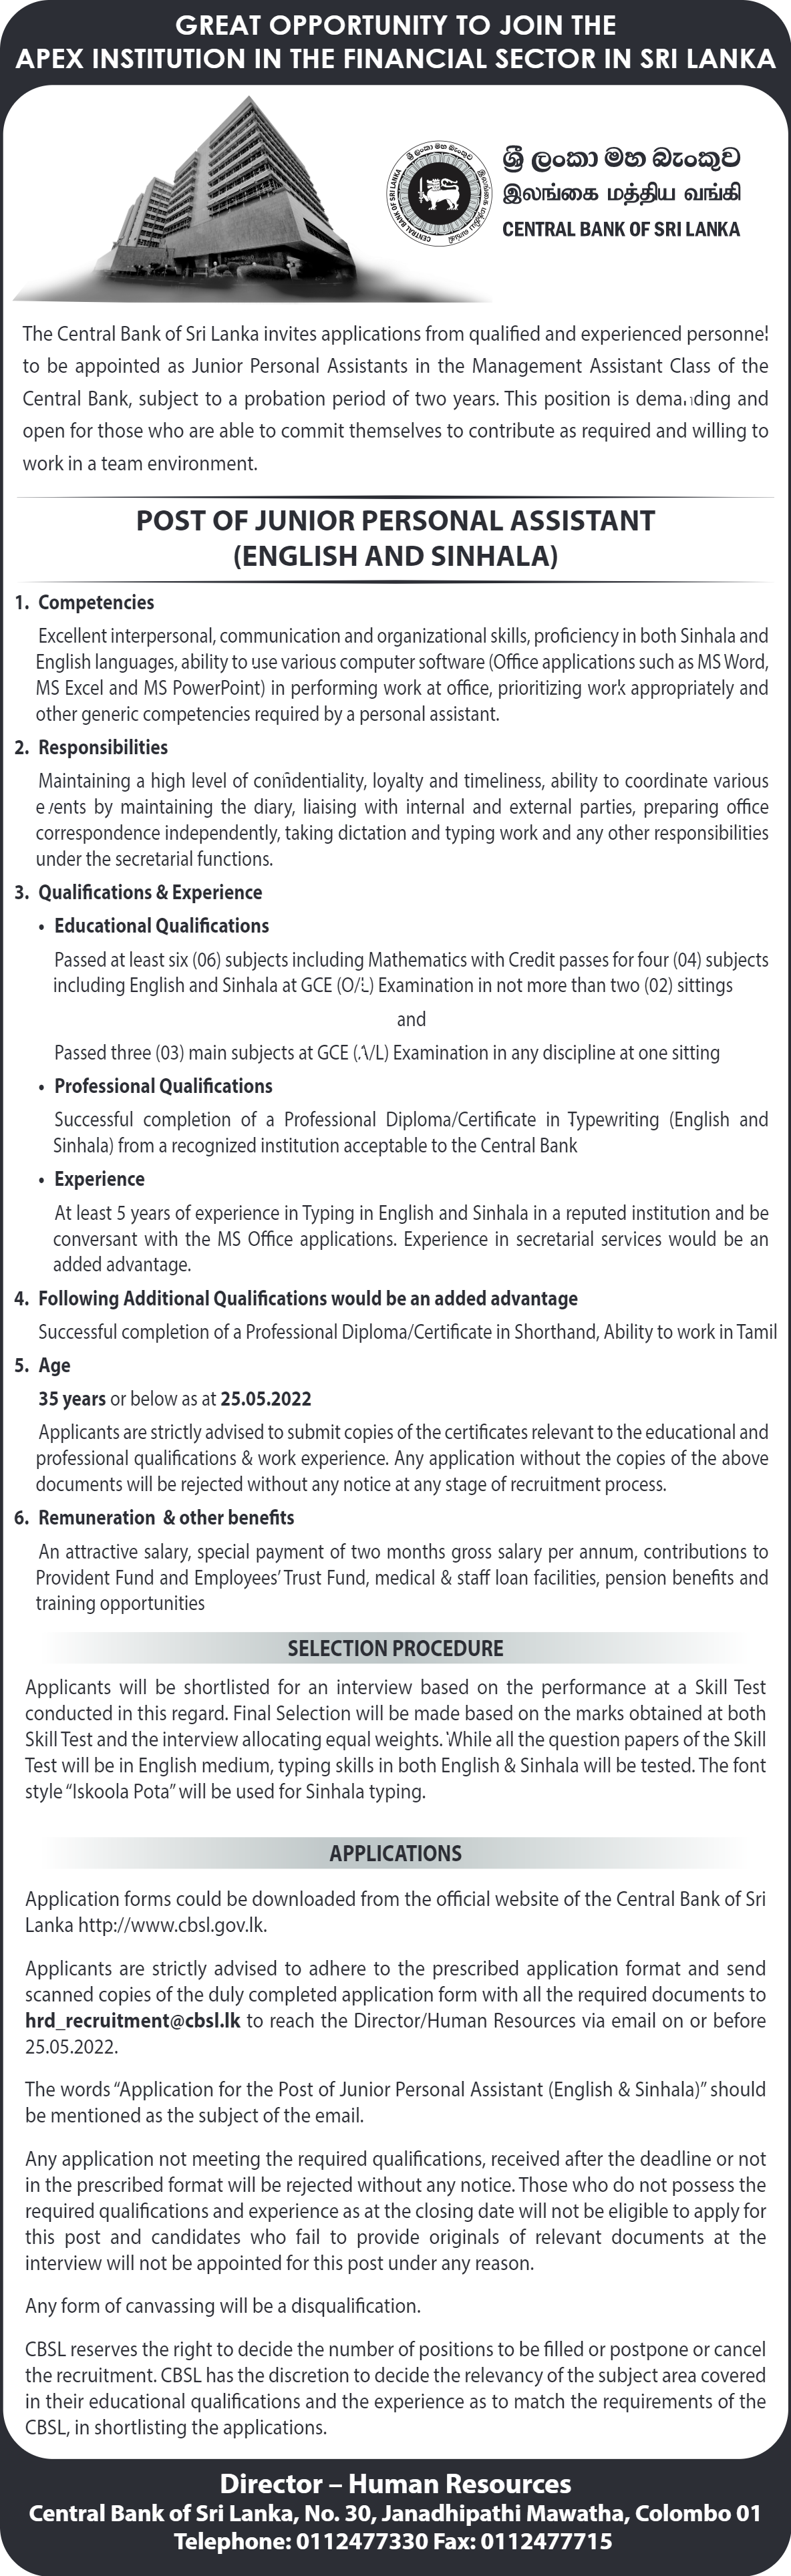 Junior Personal Assistant Vacancies 2022 at Central Bank of Sri Lanka